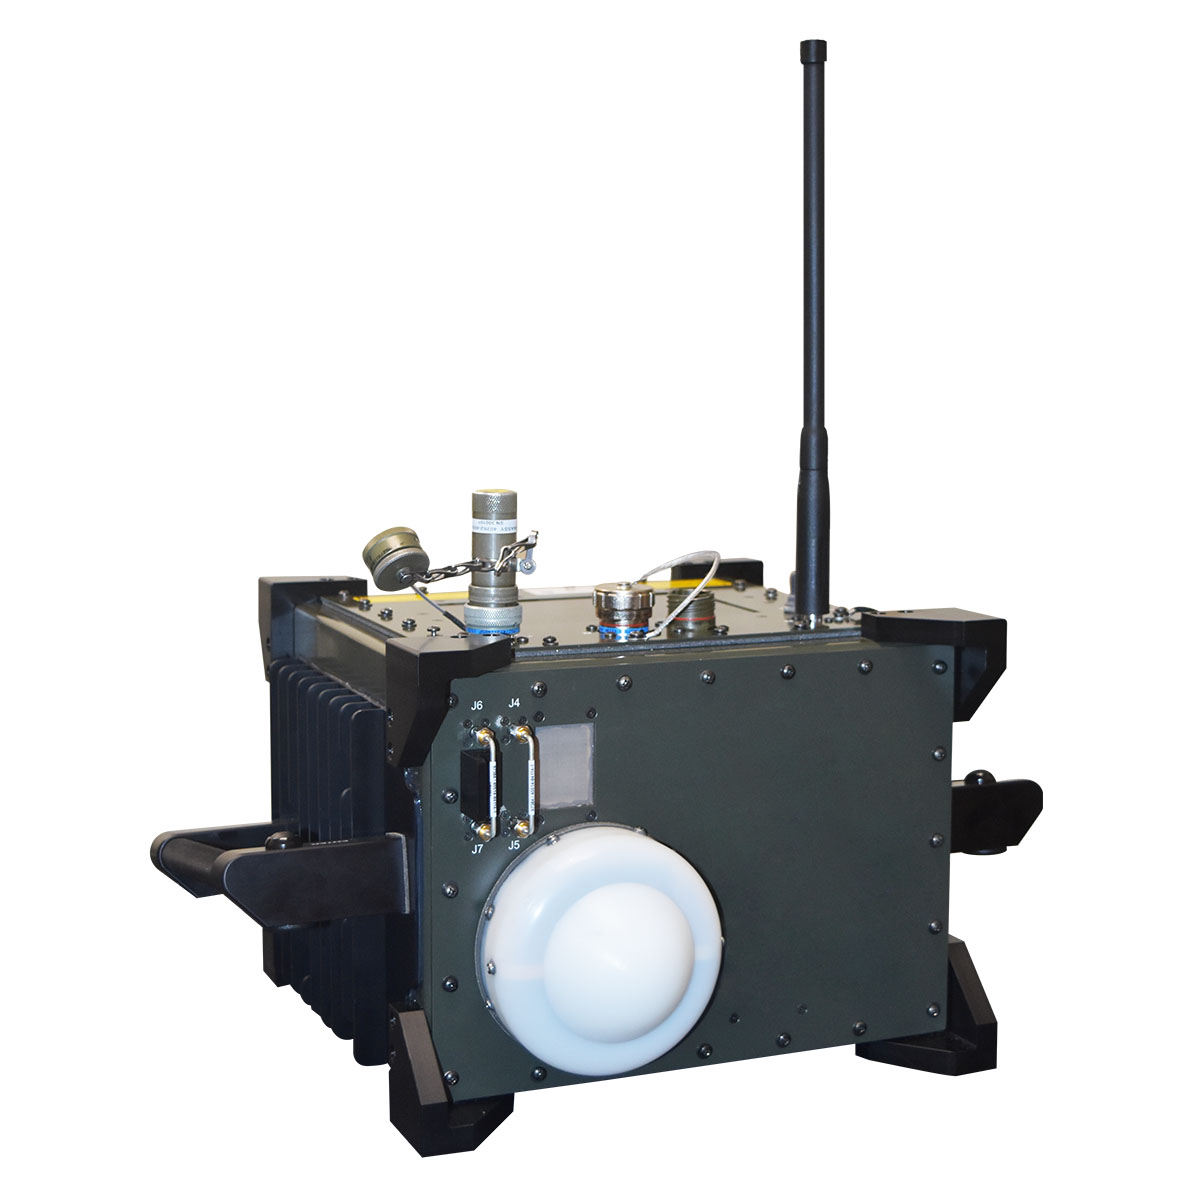 Model 627 Radar Signal Simulator